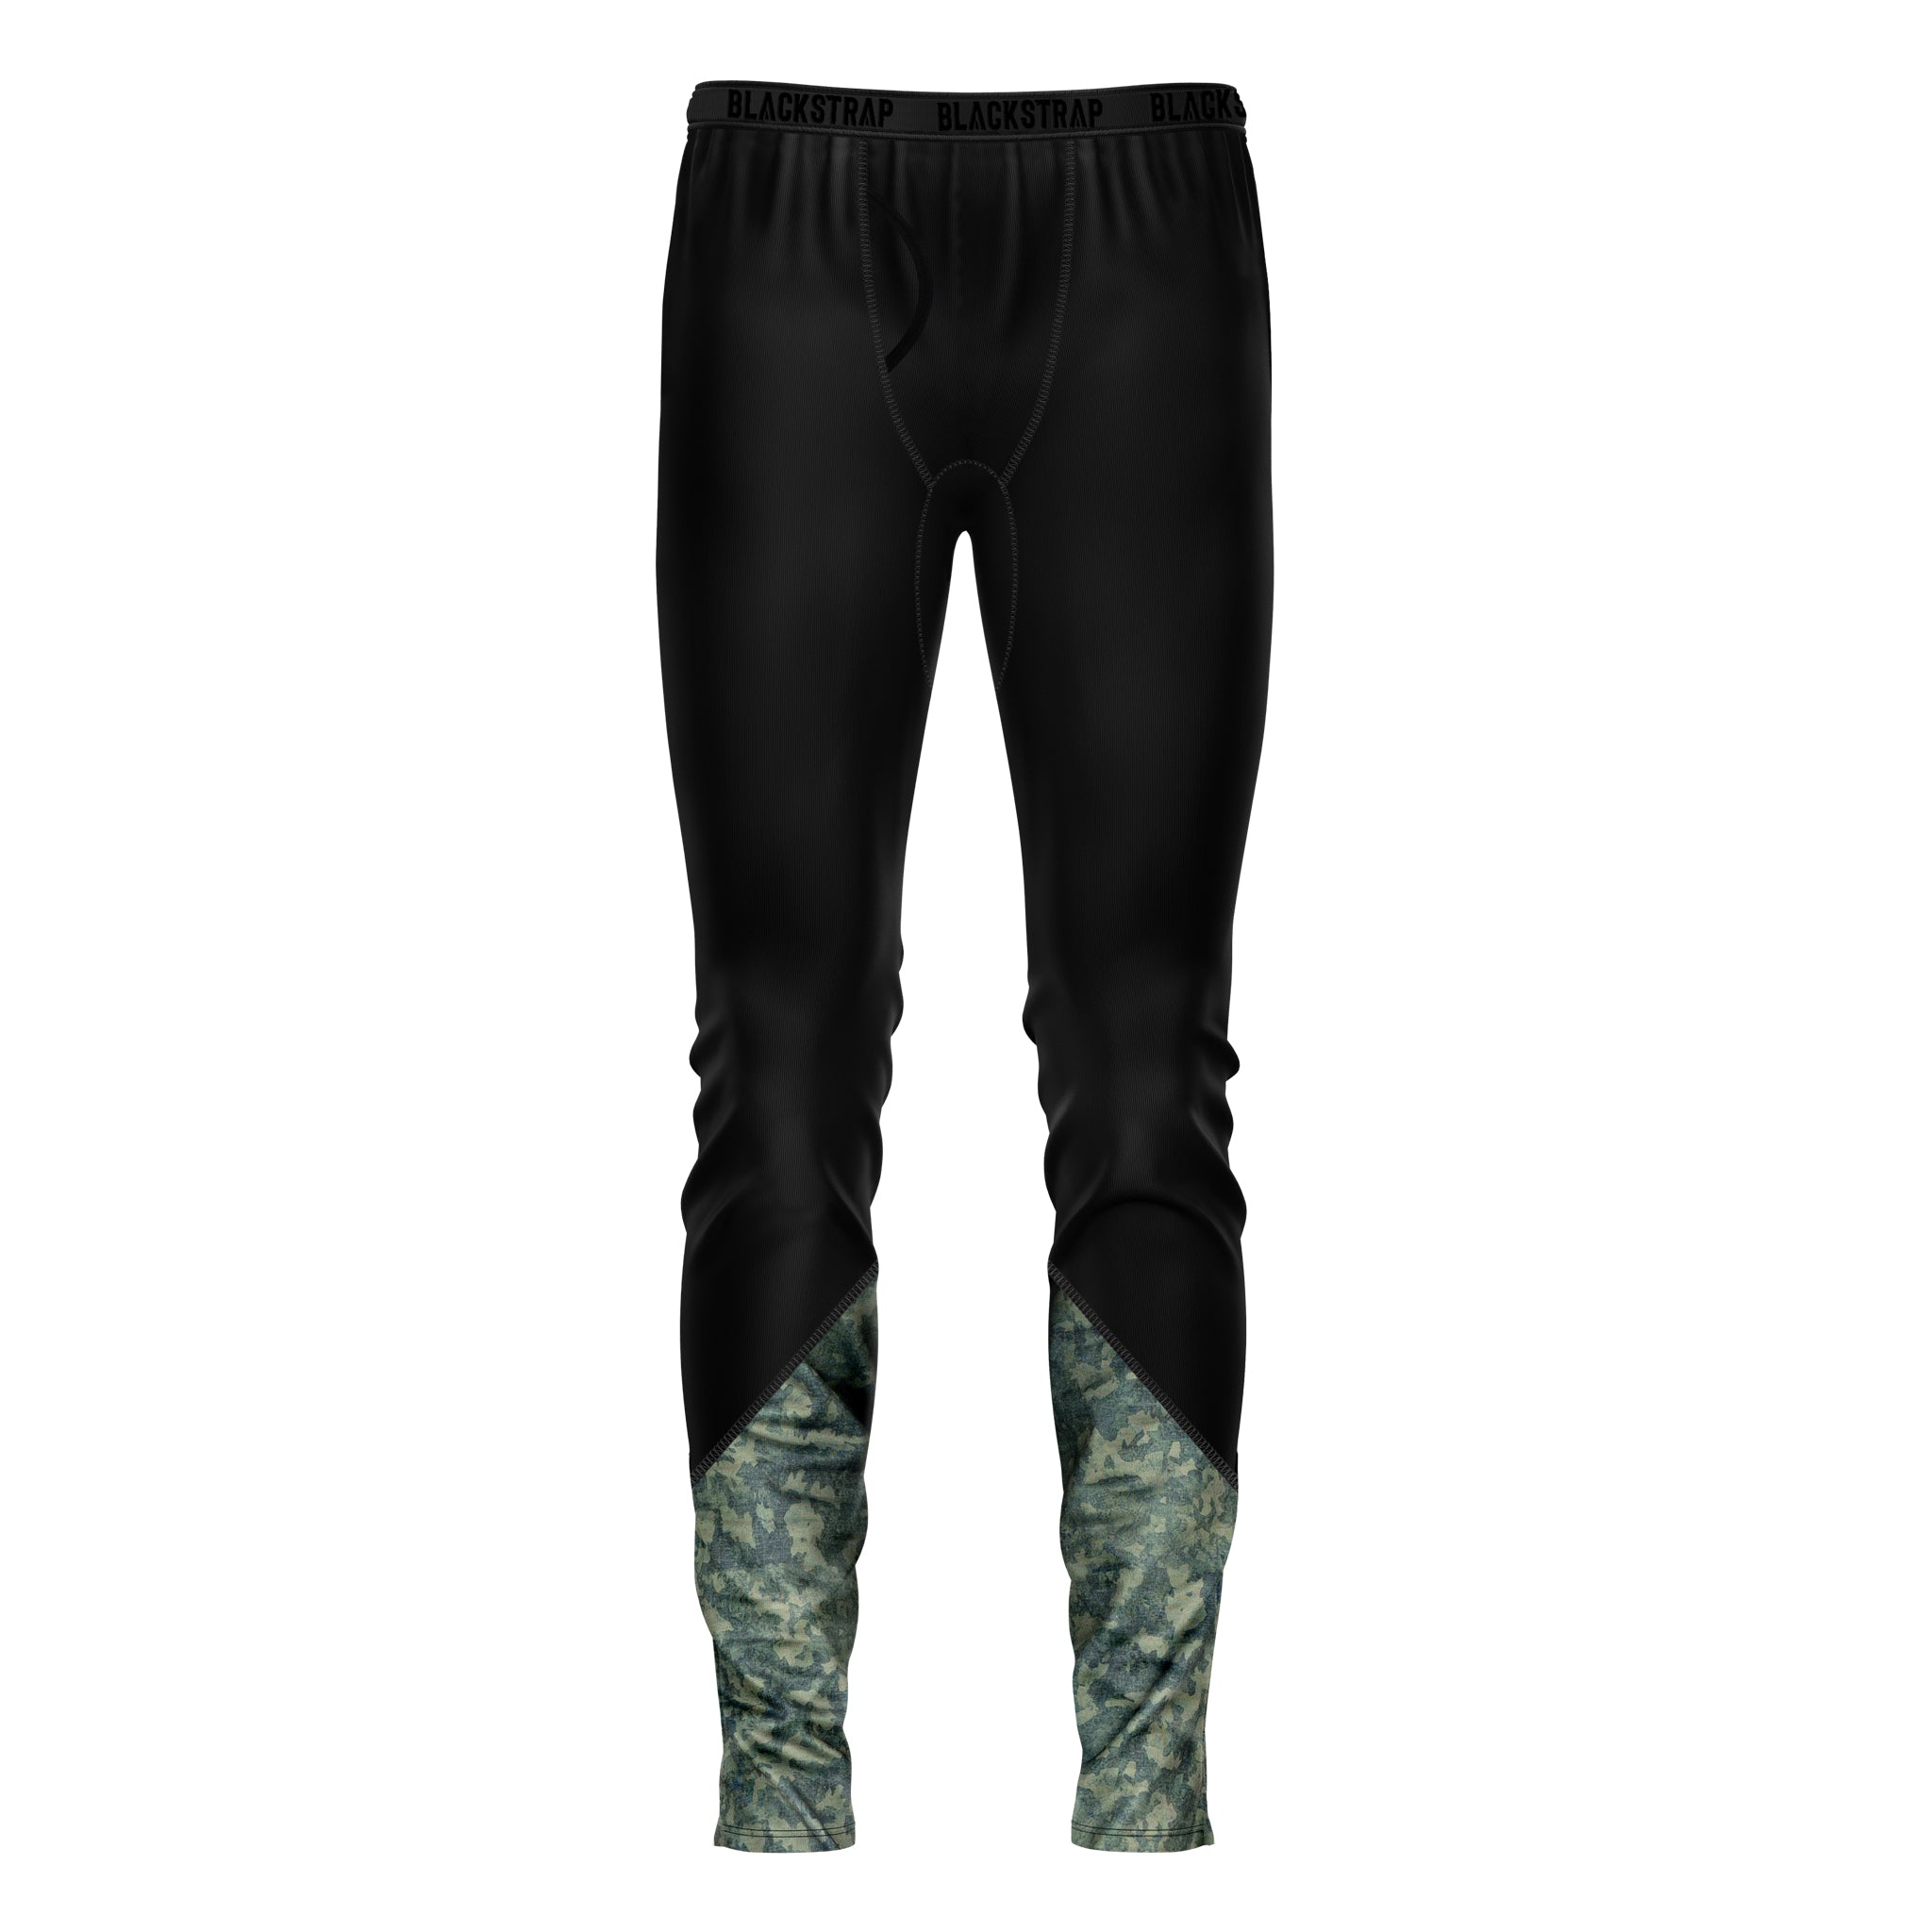 Men's Therma Base Layer Pants BlackStrap Canvas Green S 